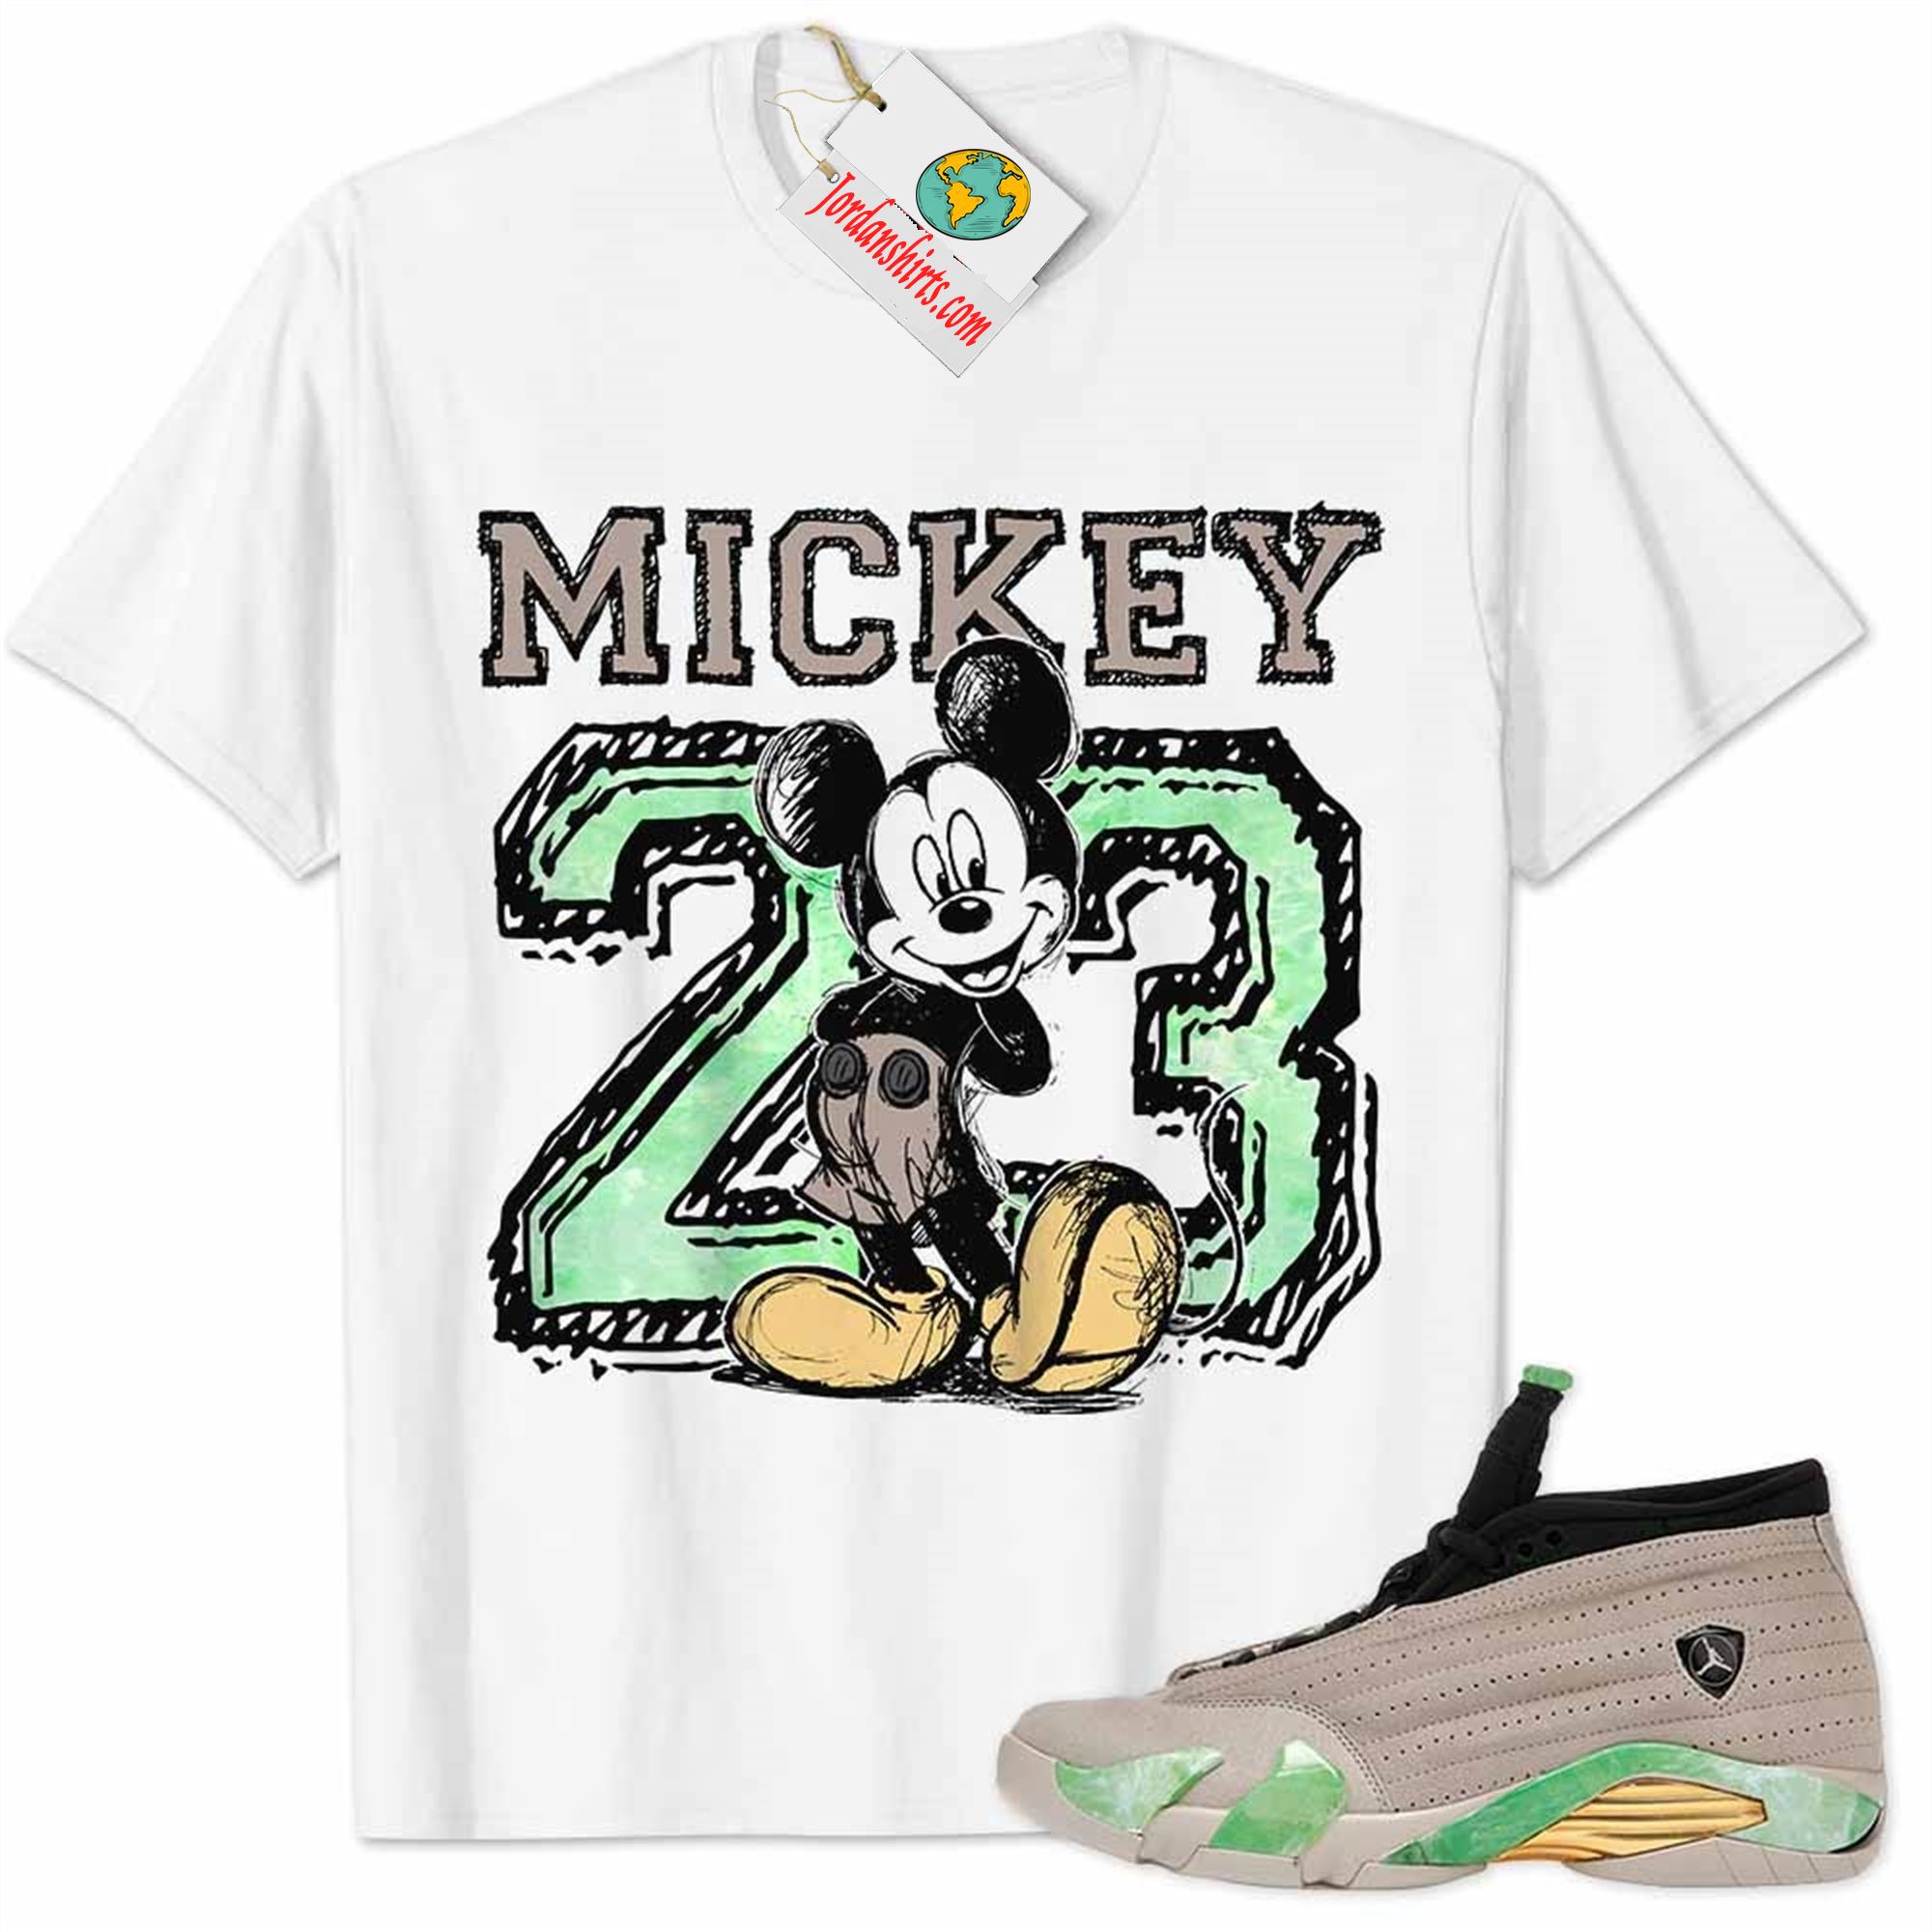 Jordan 14 Shirt, Aleali May Fortune 14s Shirt Mickey 23 Michael Jordan Number Draw White Full Size Up To 5xl